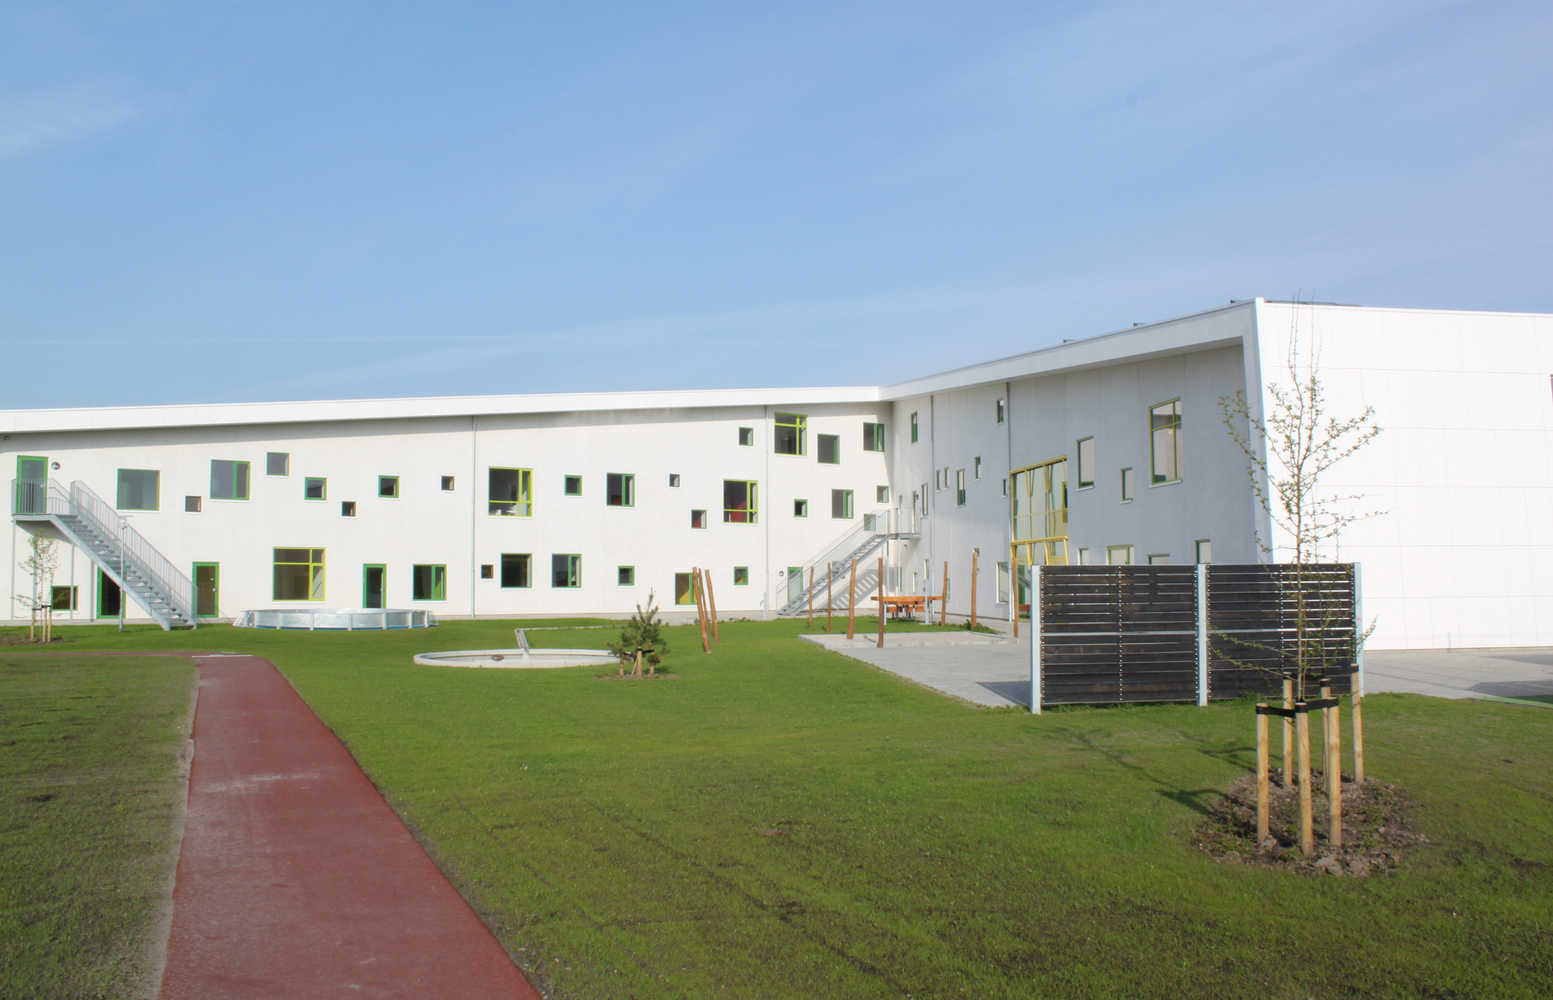 Tjørring School  FRIIS - MOLTKE Architects-52